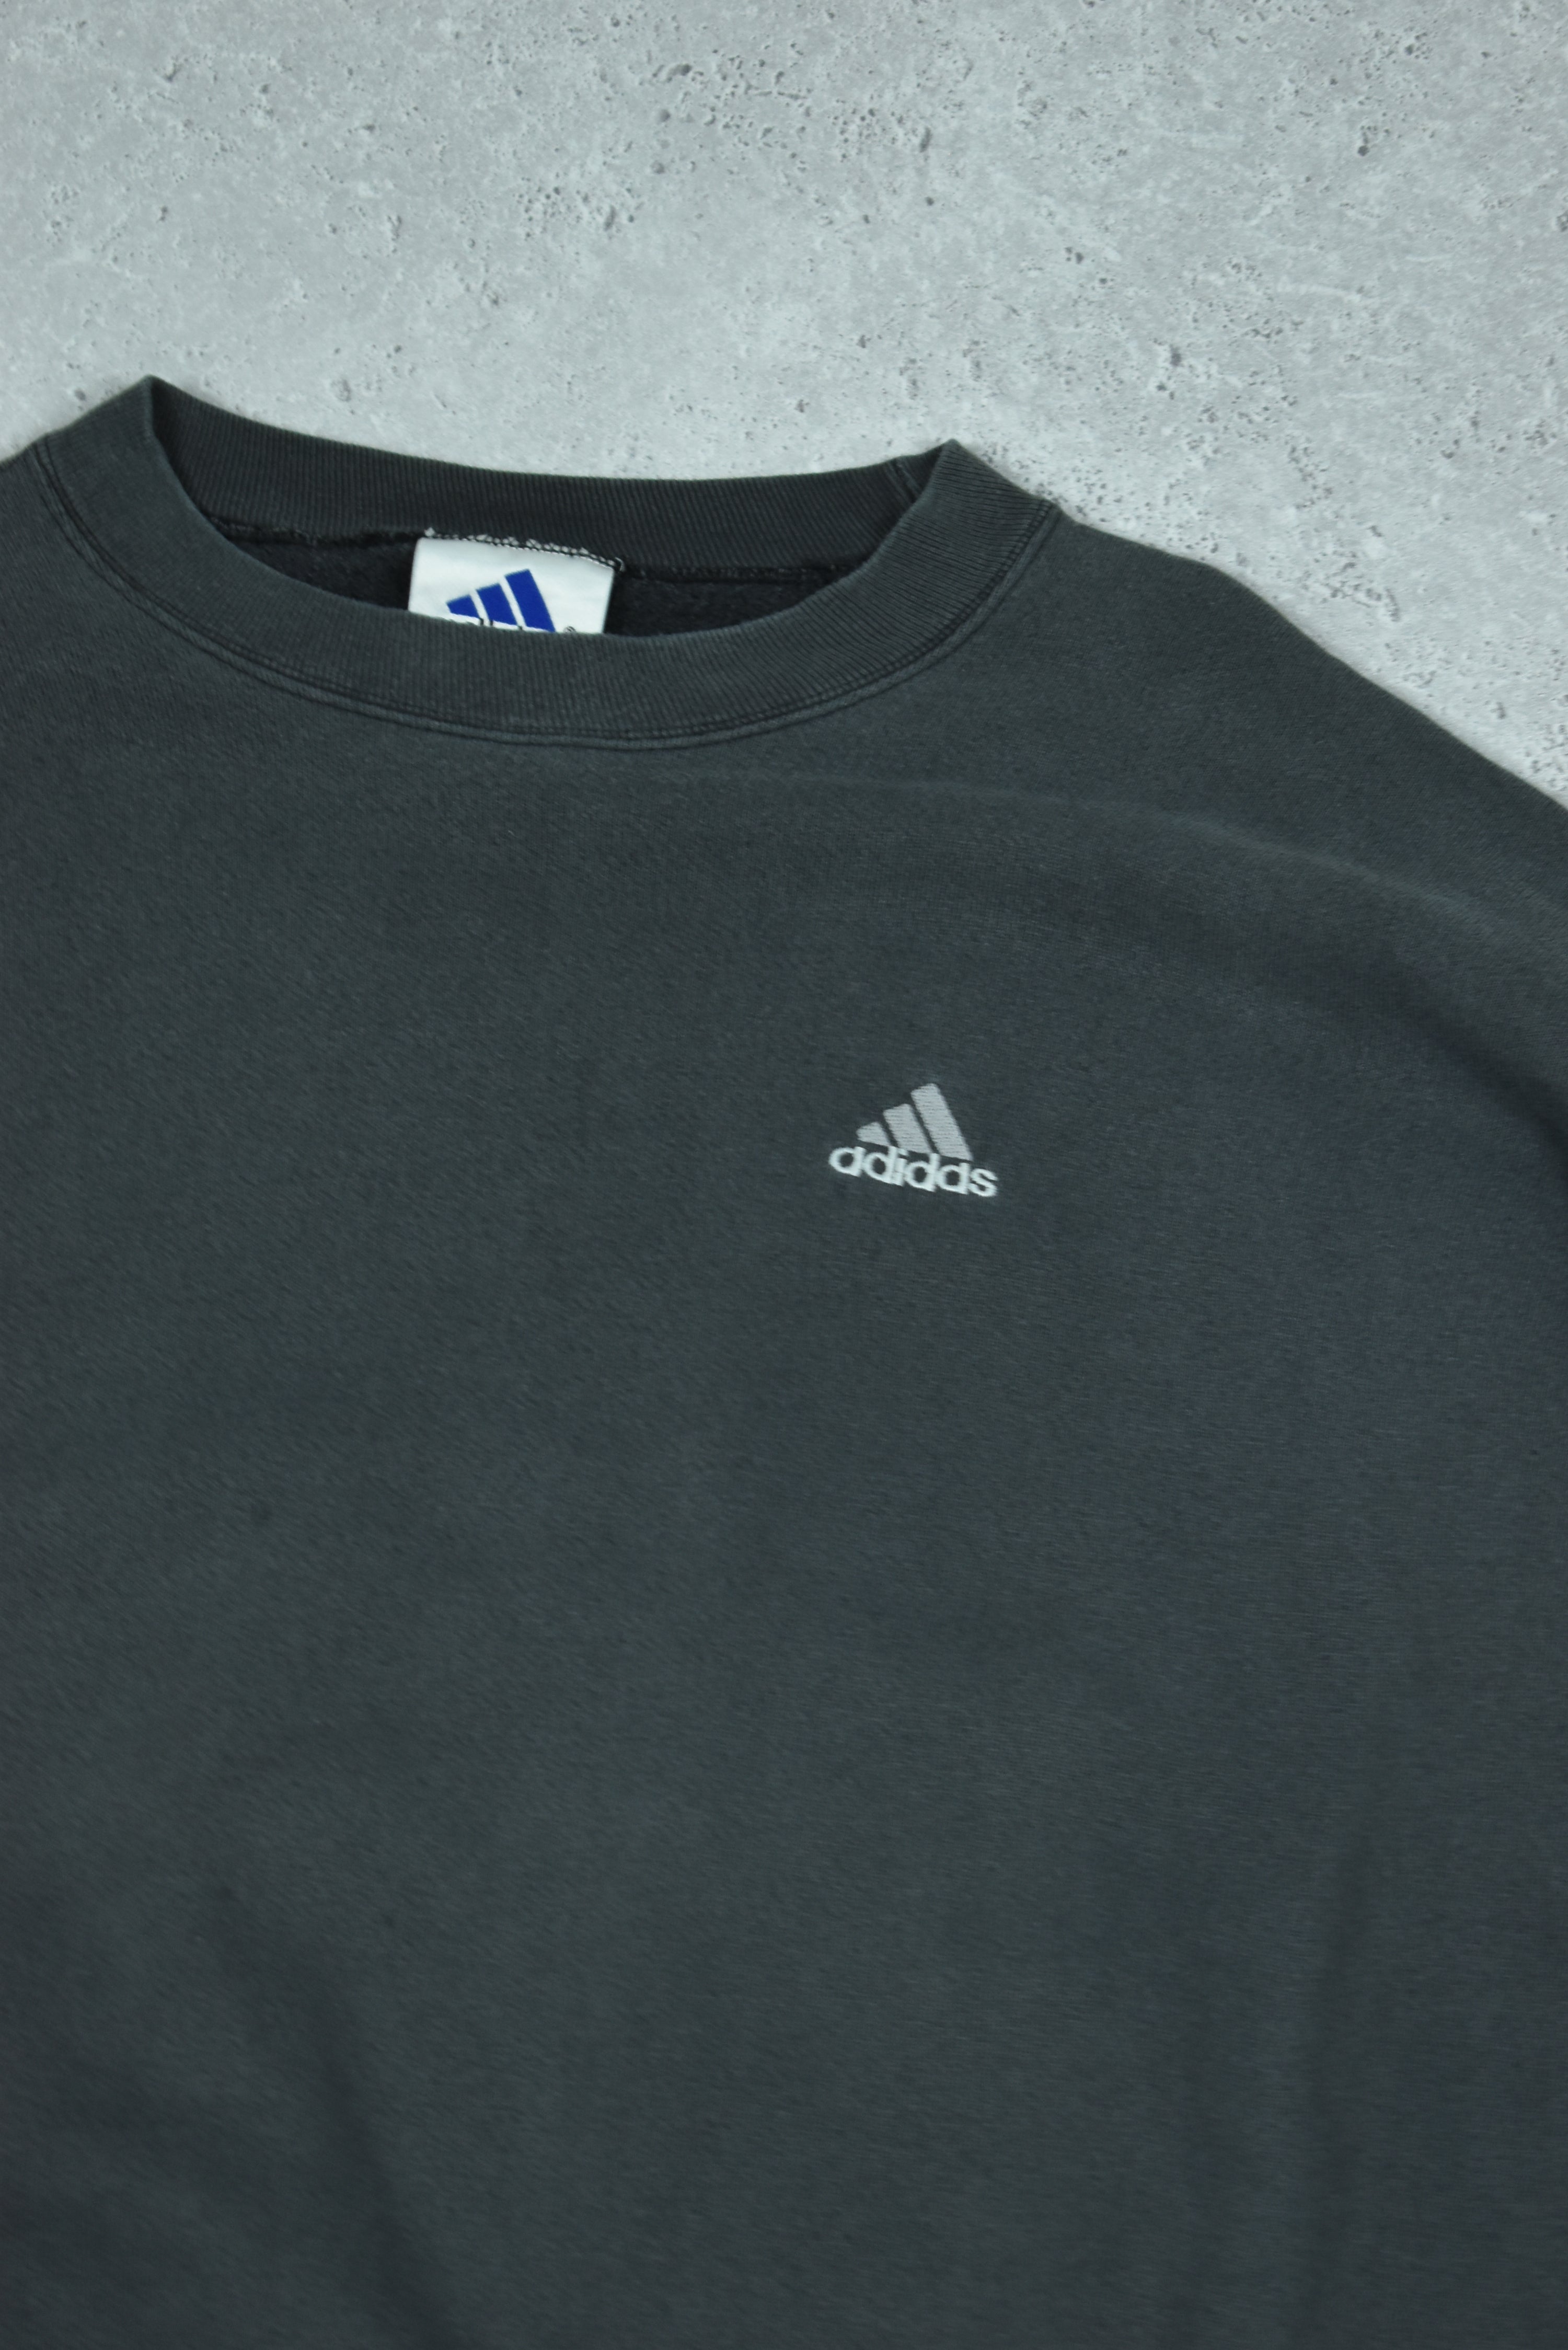 Vintage Adidas Embroidery Small Logo Sweatshirt Xlarge